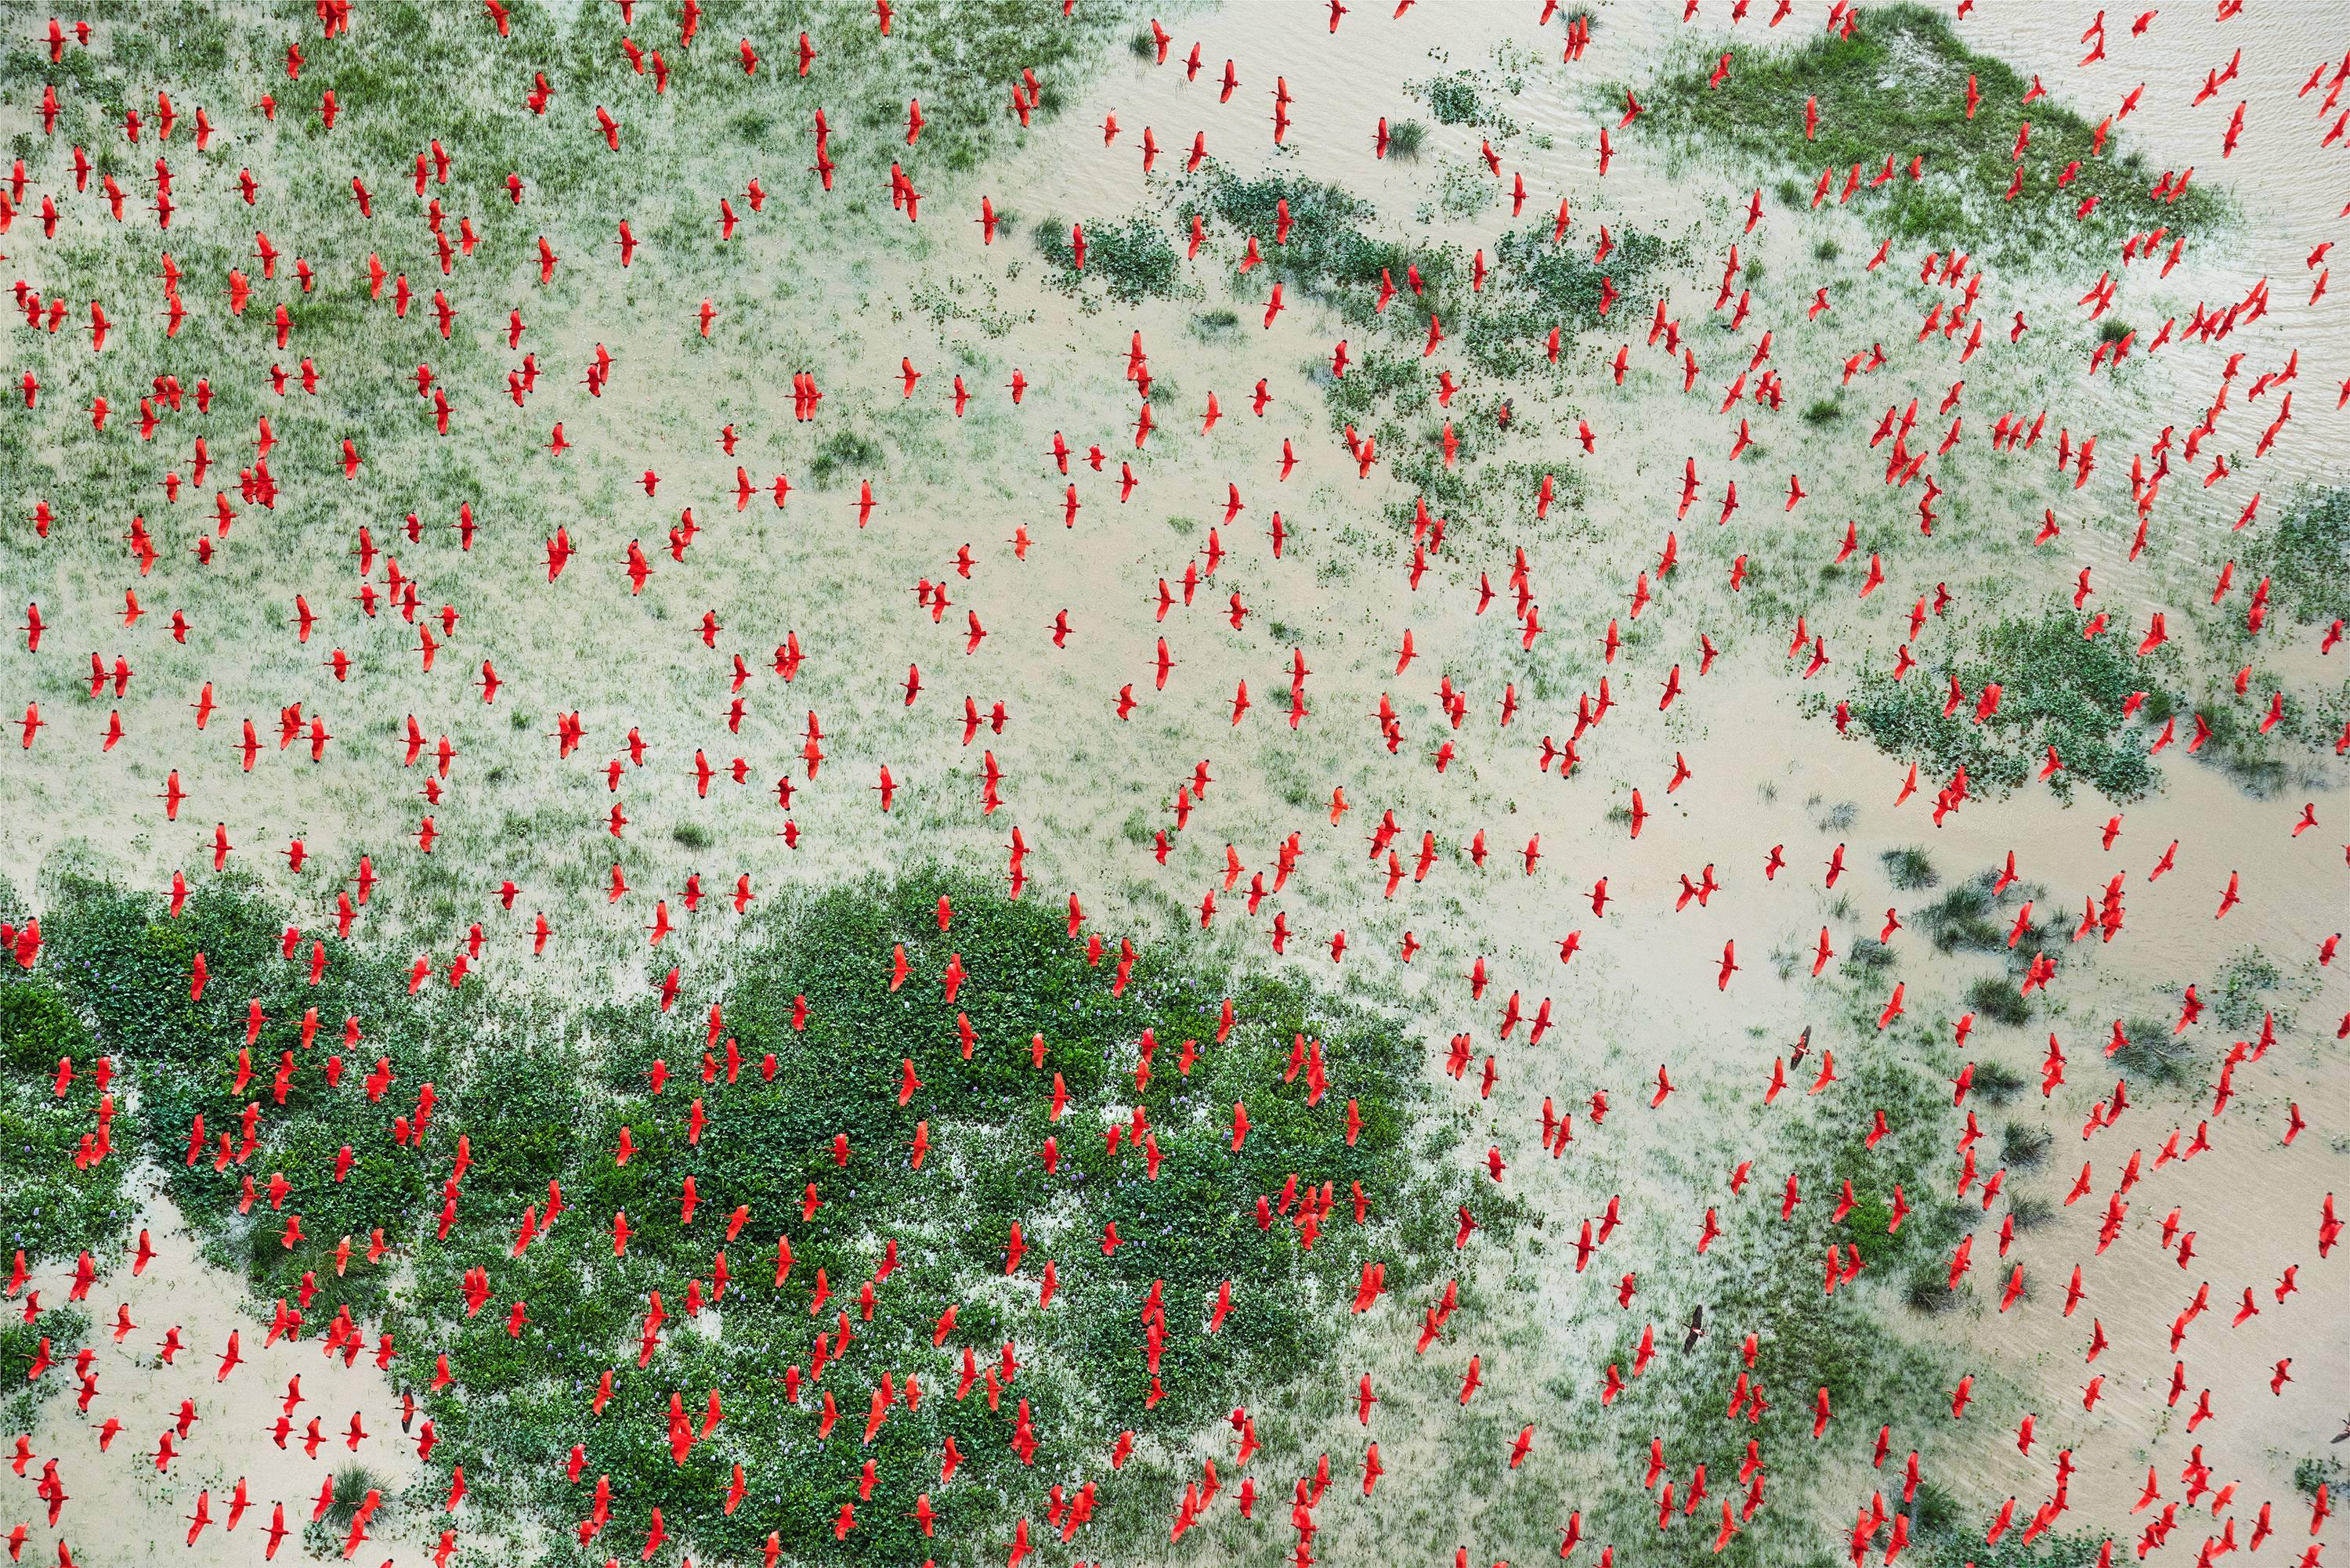 Daniel Beltra Landscape Photograph - Amazon scarlet ibis (#222)